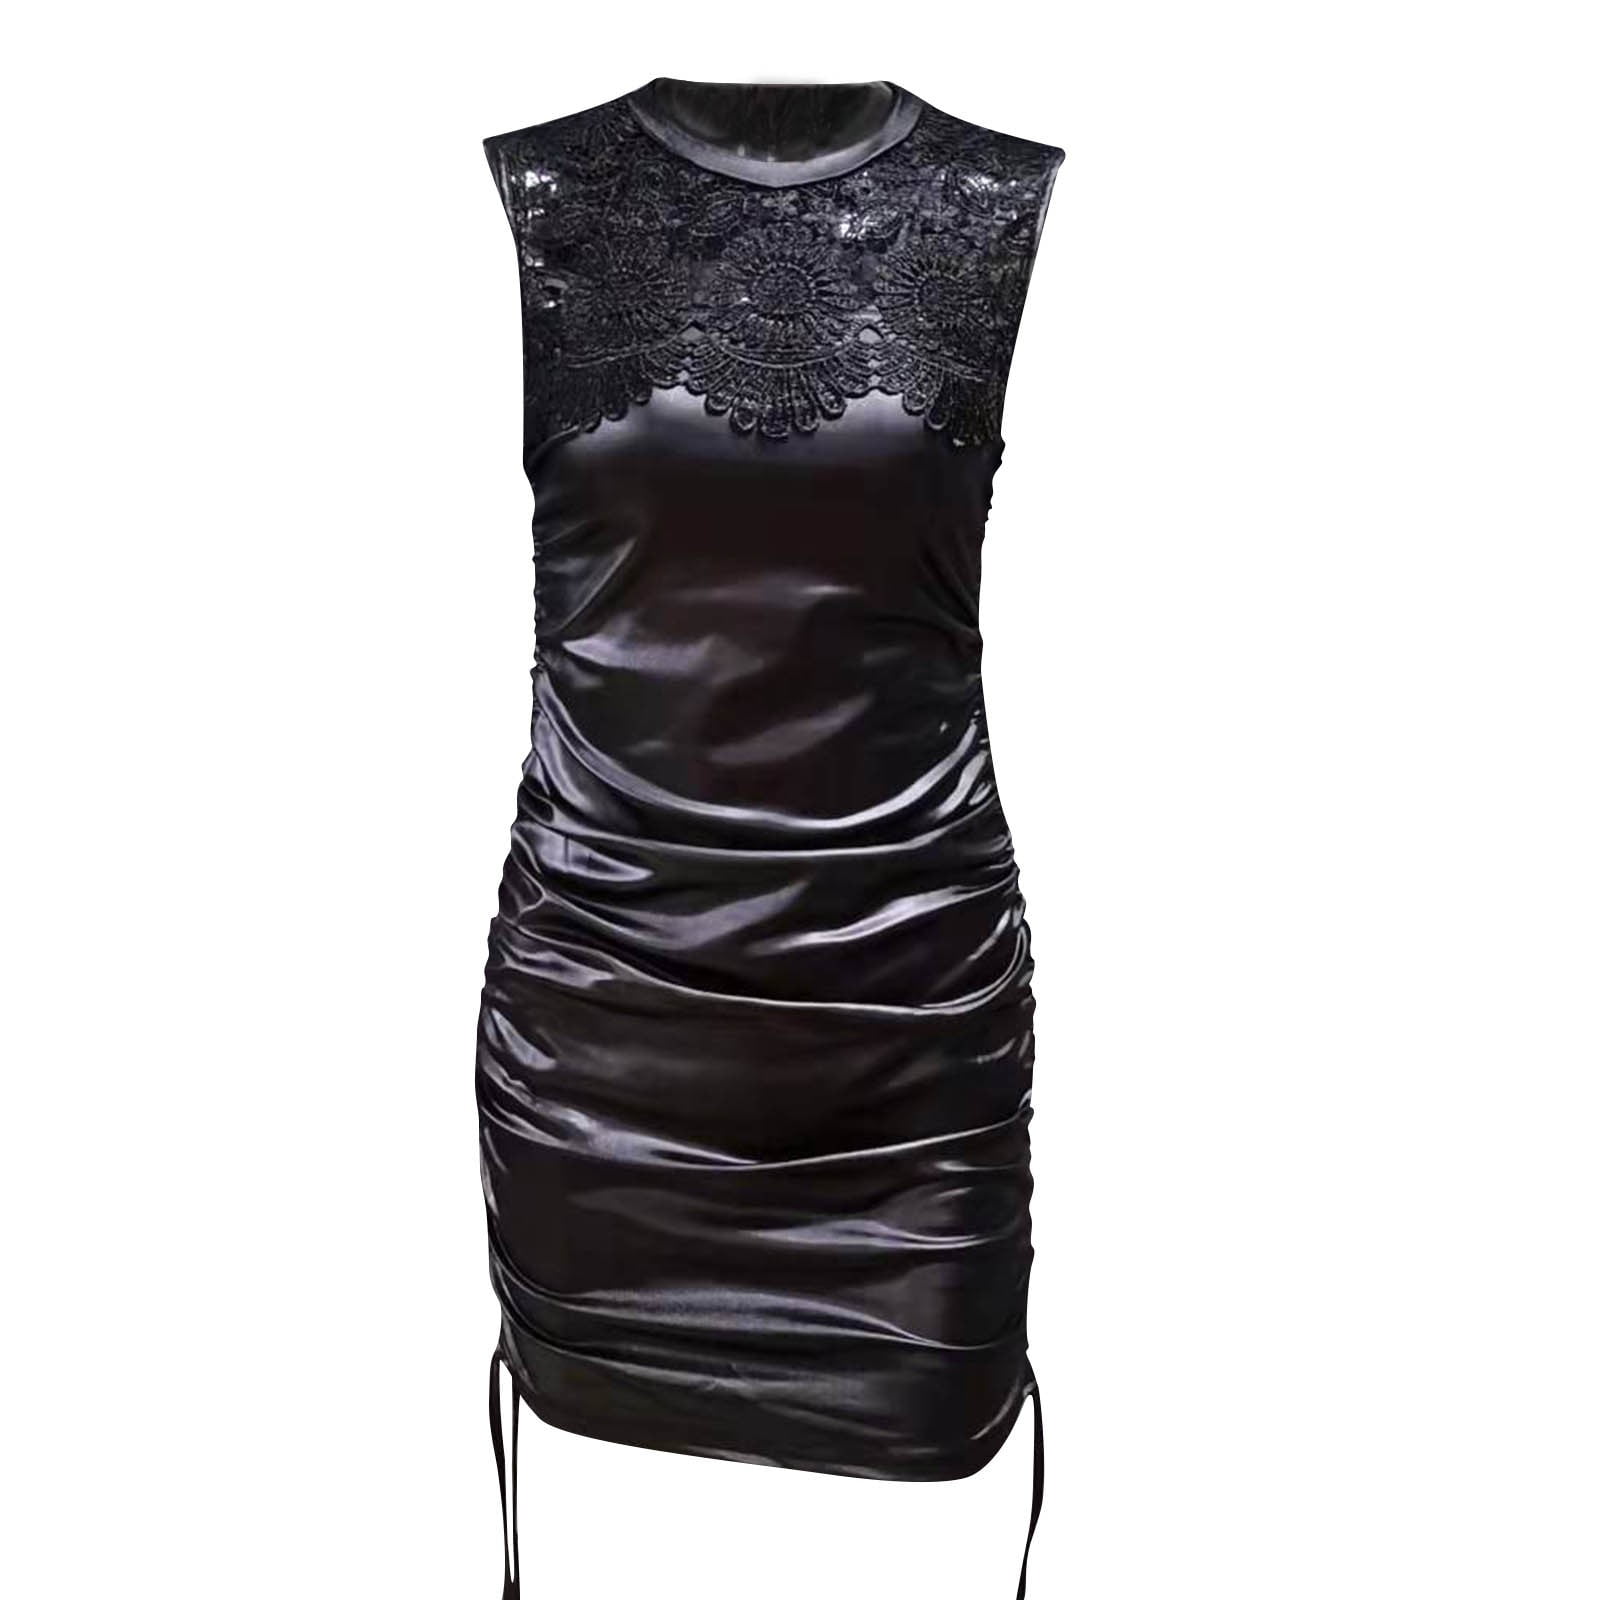 Dresses for Women - Women's Lace Stitching Rope Sleeveless Round Neck Sexy  Skin Tight Imitation Leather Dress Travel Dress Black : :  Fashion